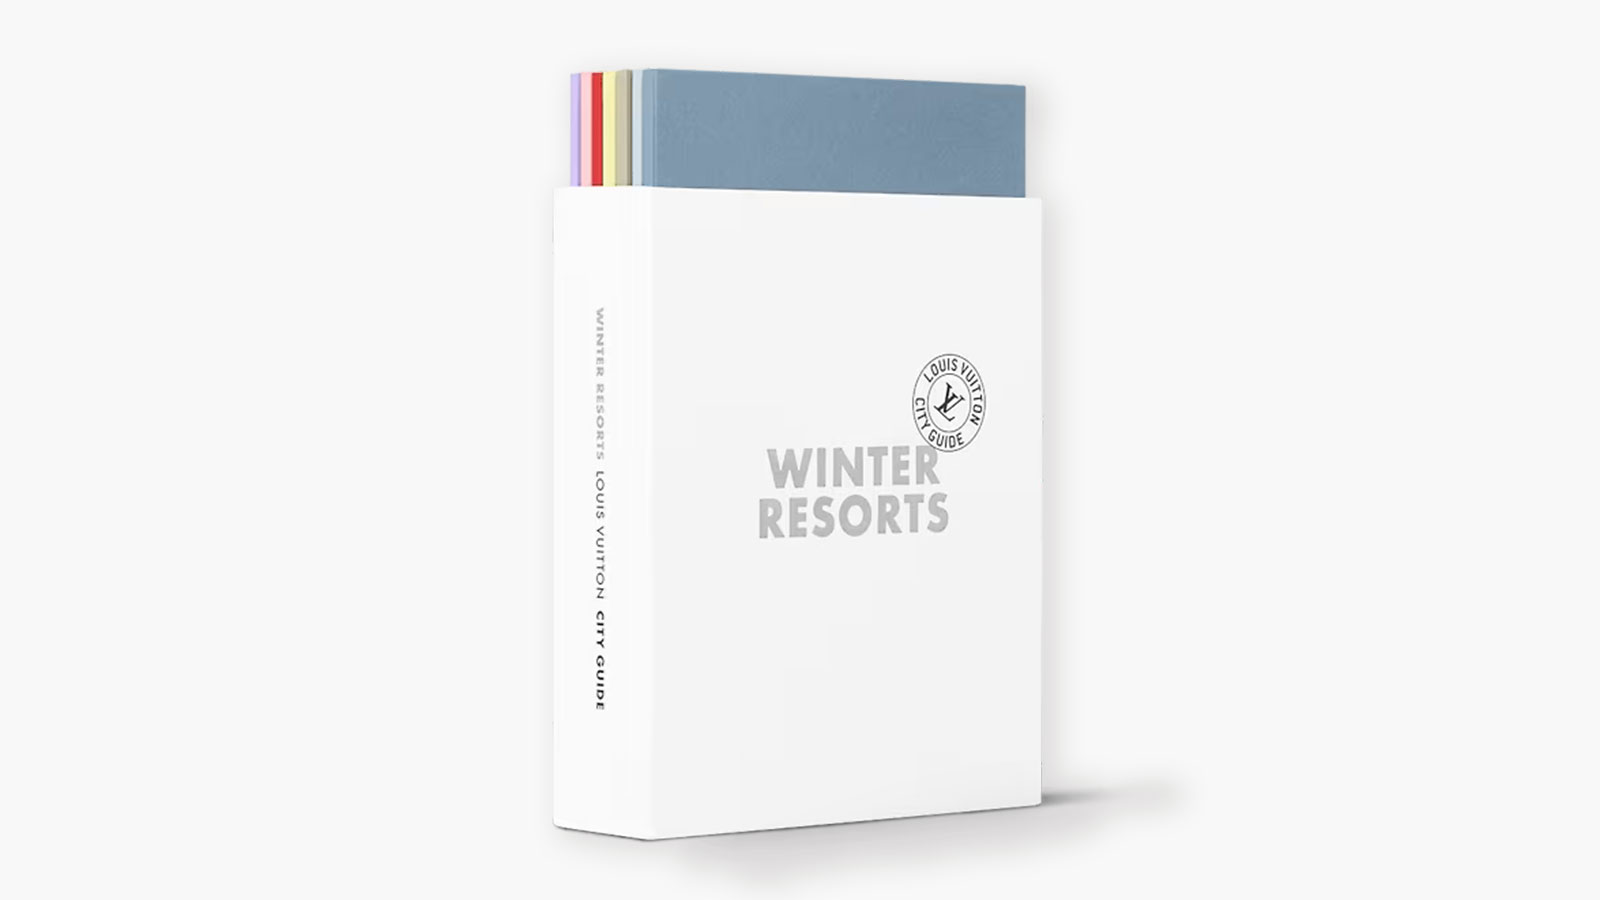 Louis Vuitton Winter City Guide box set